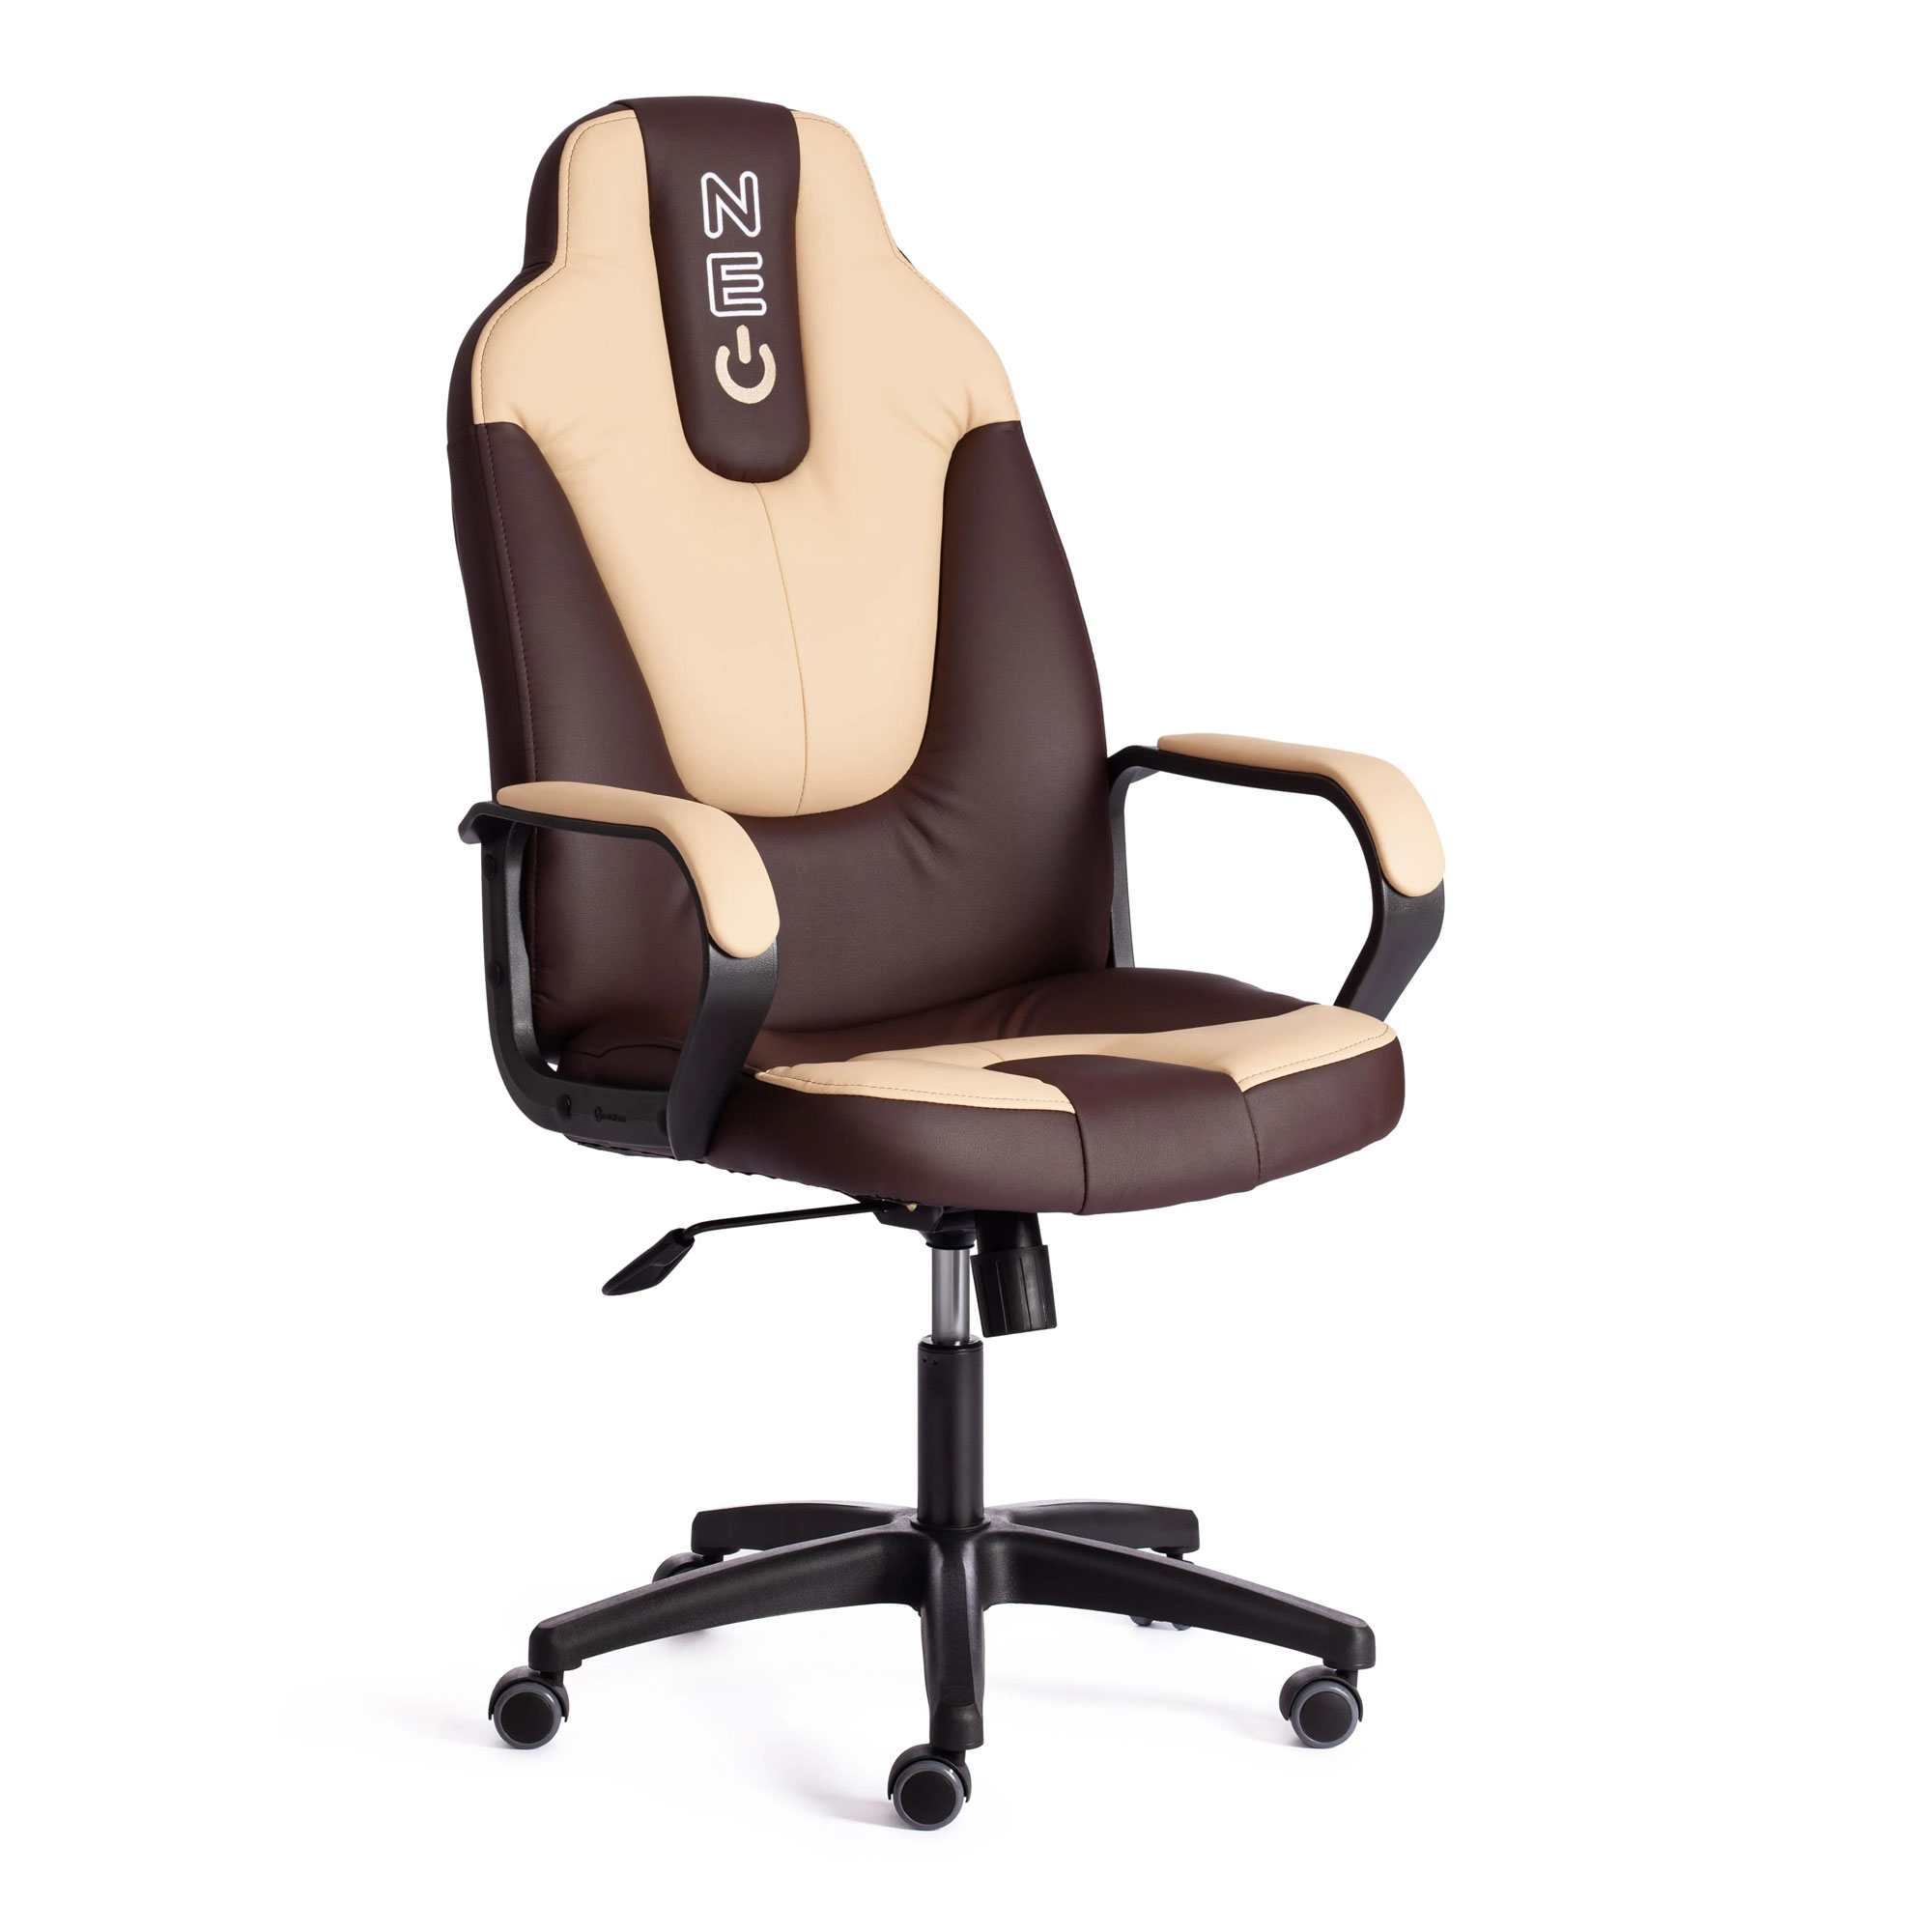 Кресло компьютерное TC Neo искусственная кожа коричневое с бежевым 64х49х122 см кресло компьютерное tc driver искусственная кожа чёрное с красным 55х49х126 см